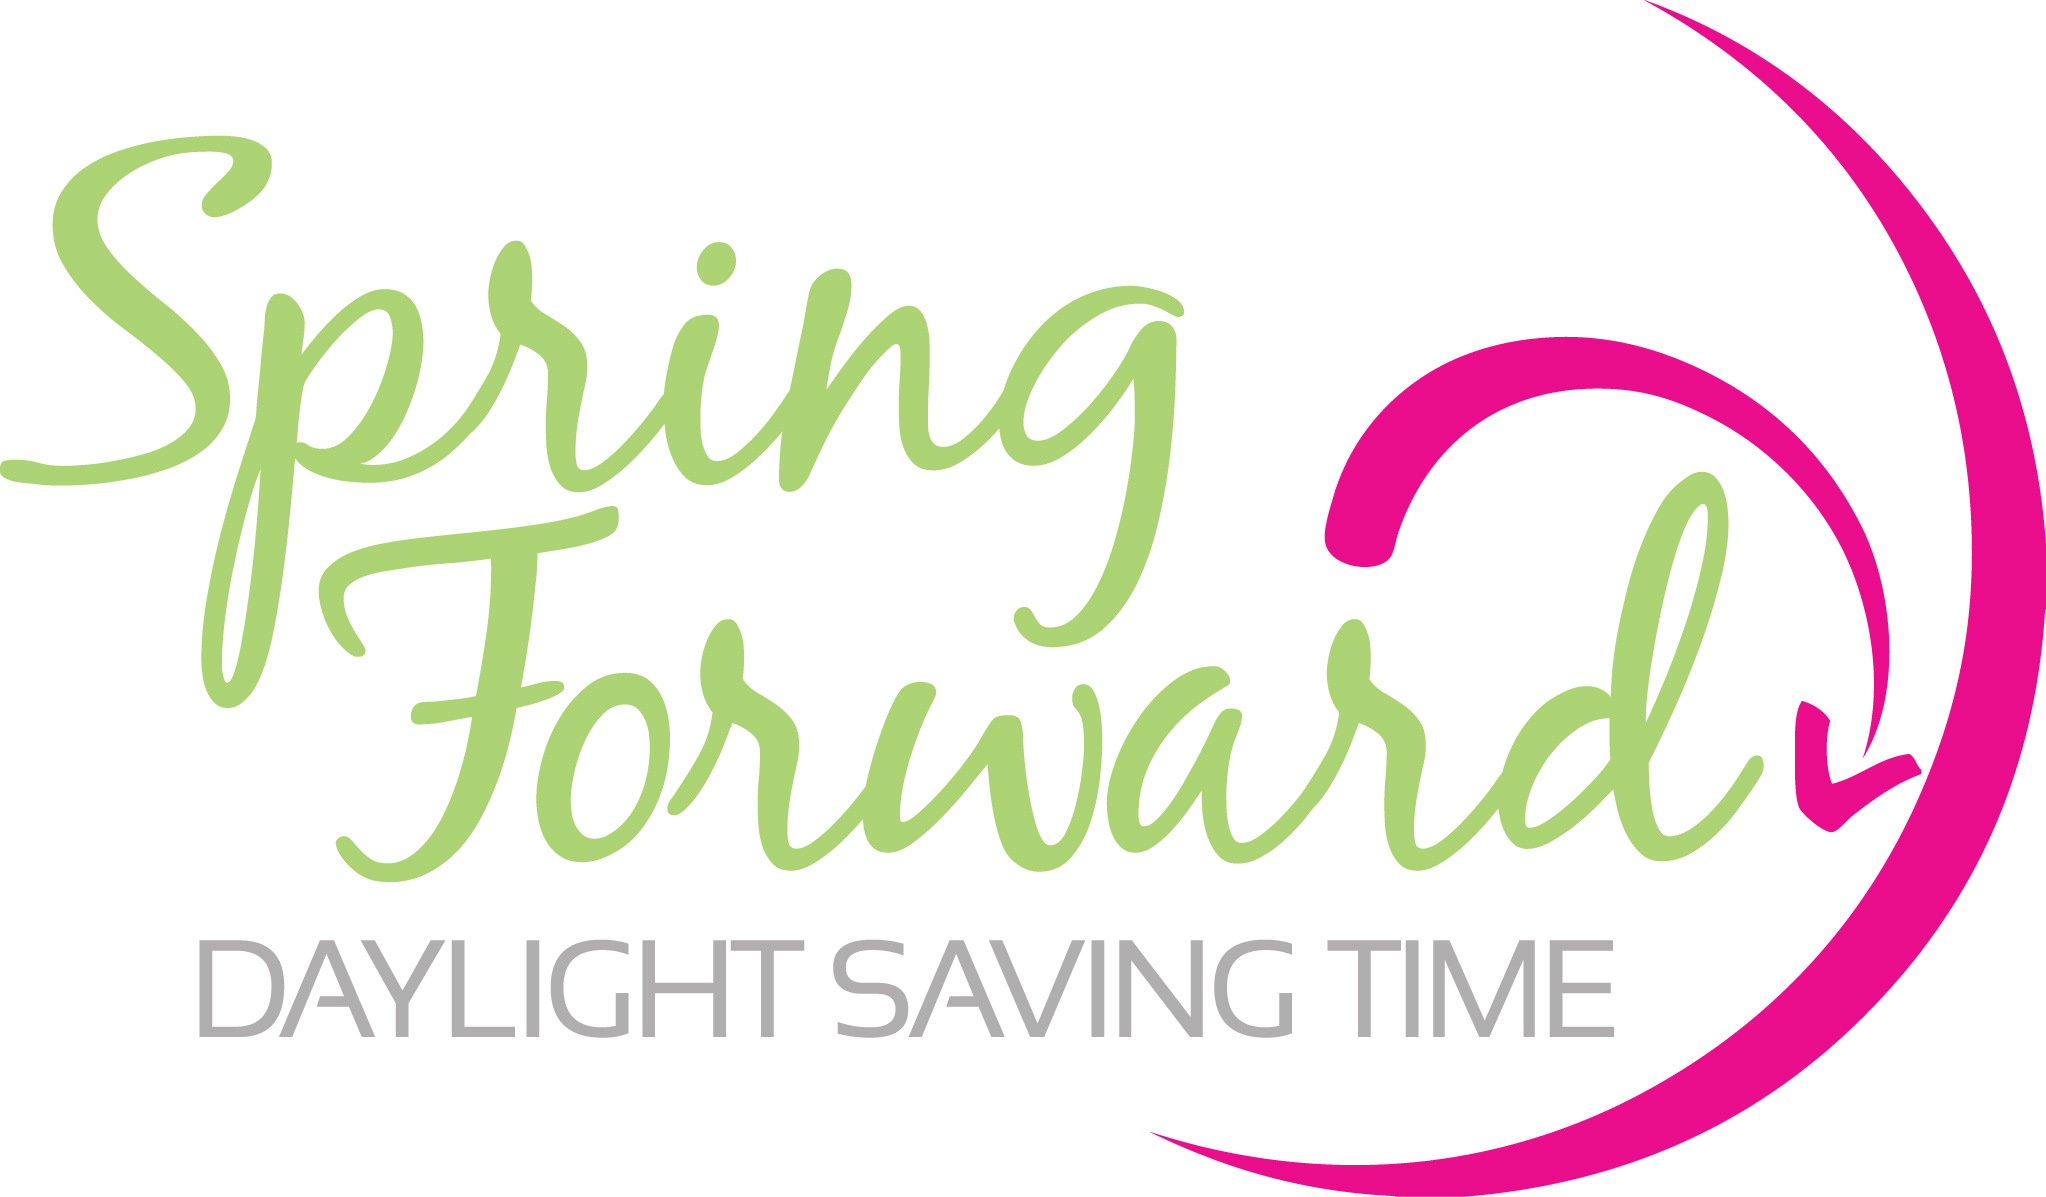 Daylight savings time 2016 calendar clipart